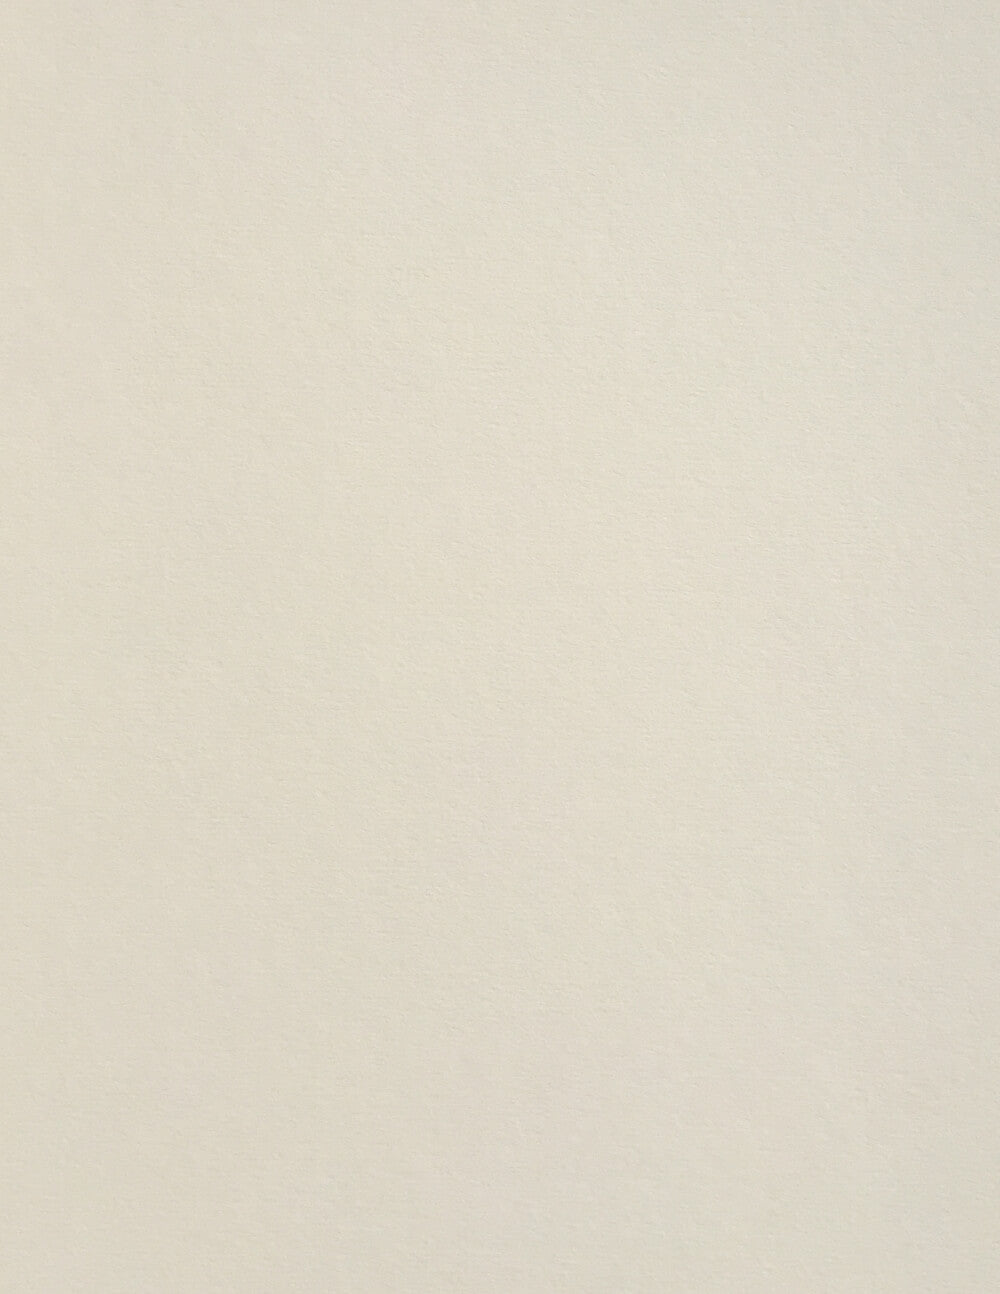 SILVER Mirri Sparkle 'No Mess' Glitter Paper – The 12x12 Cardstock Shop